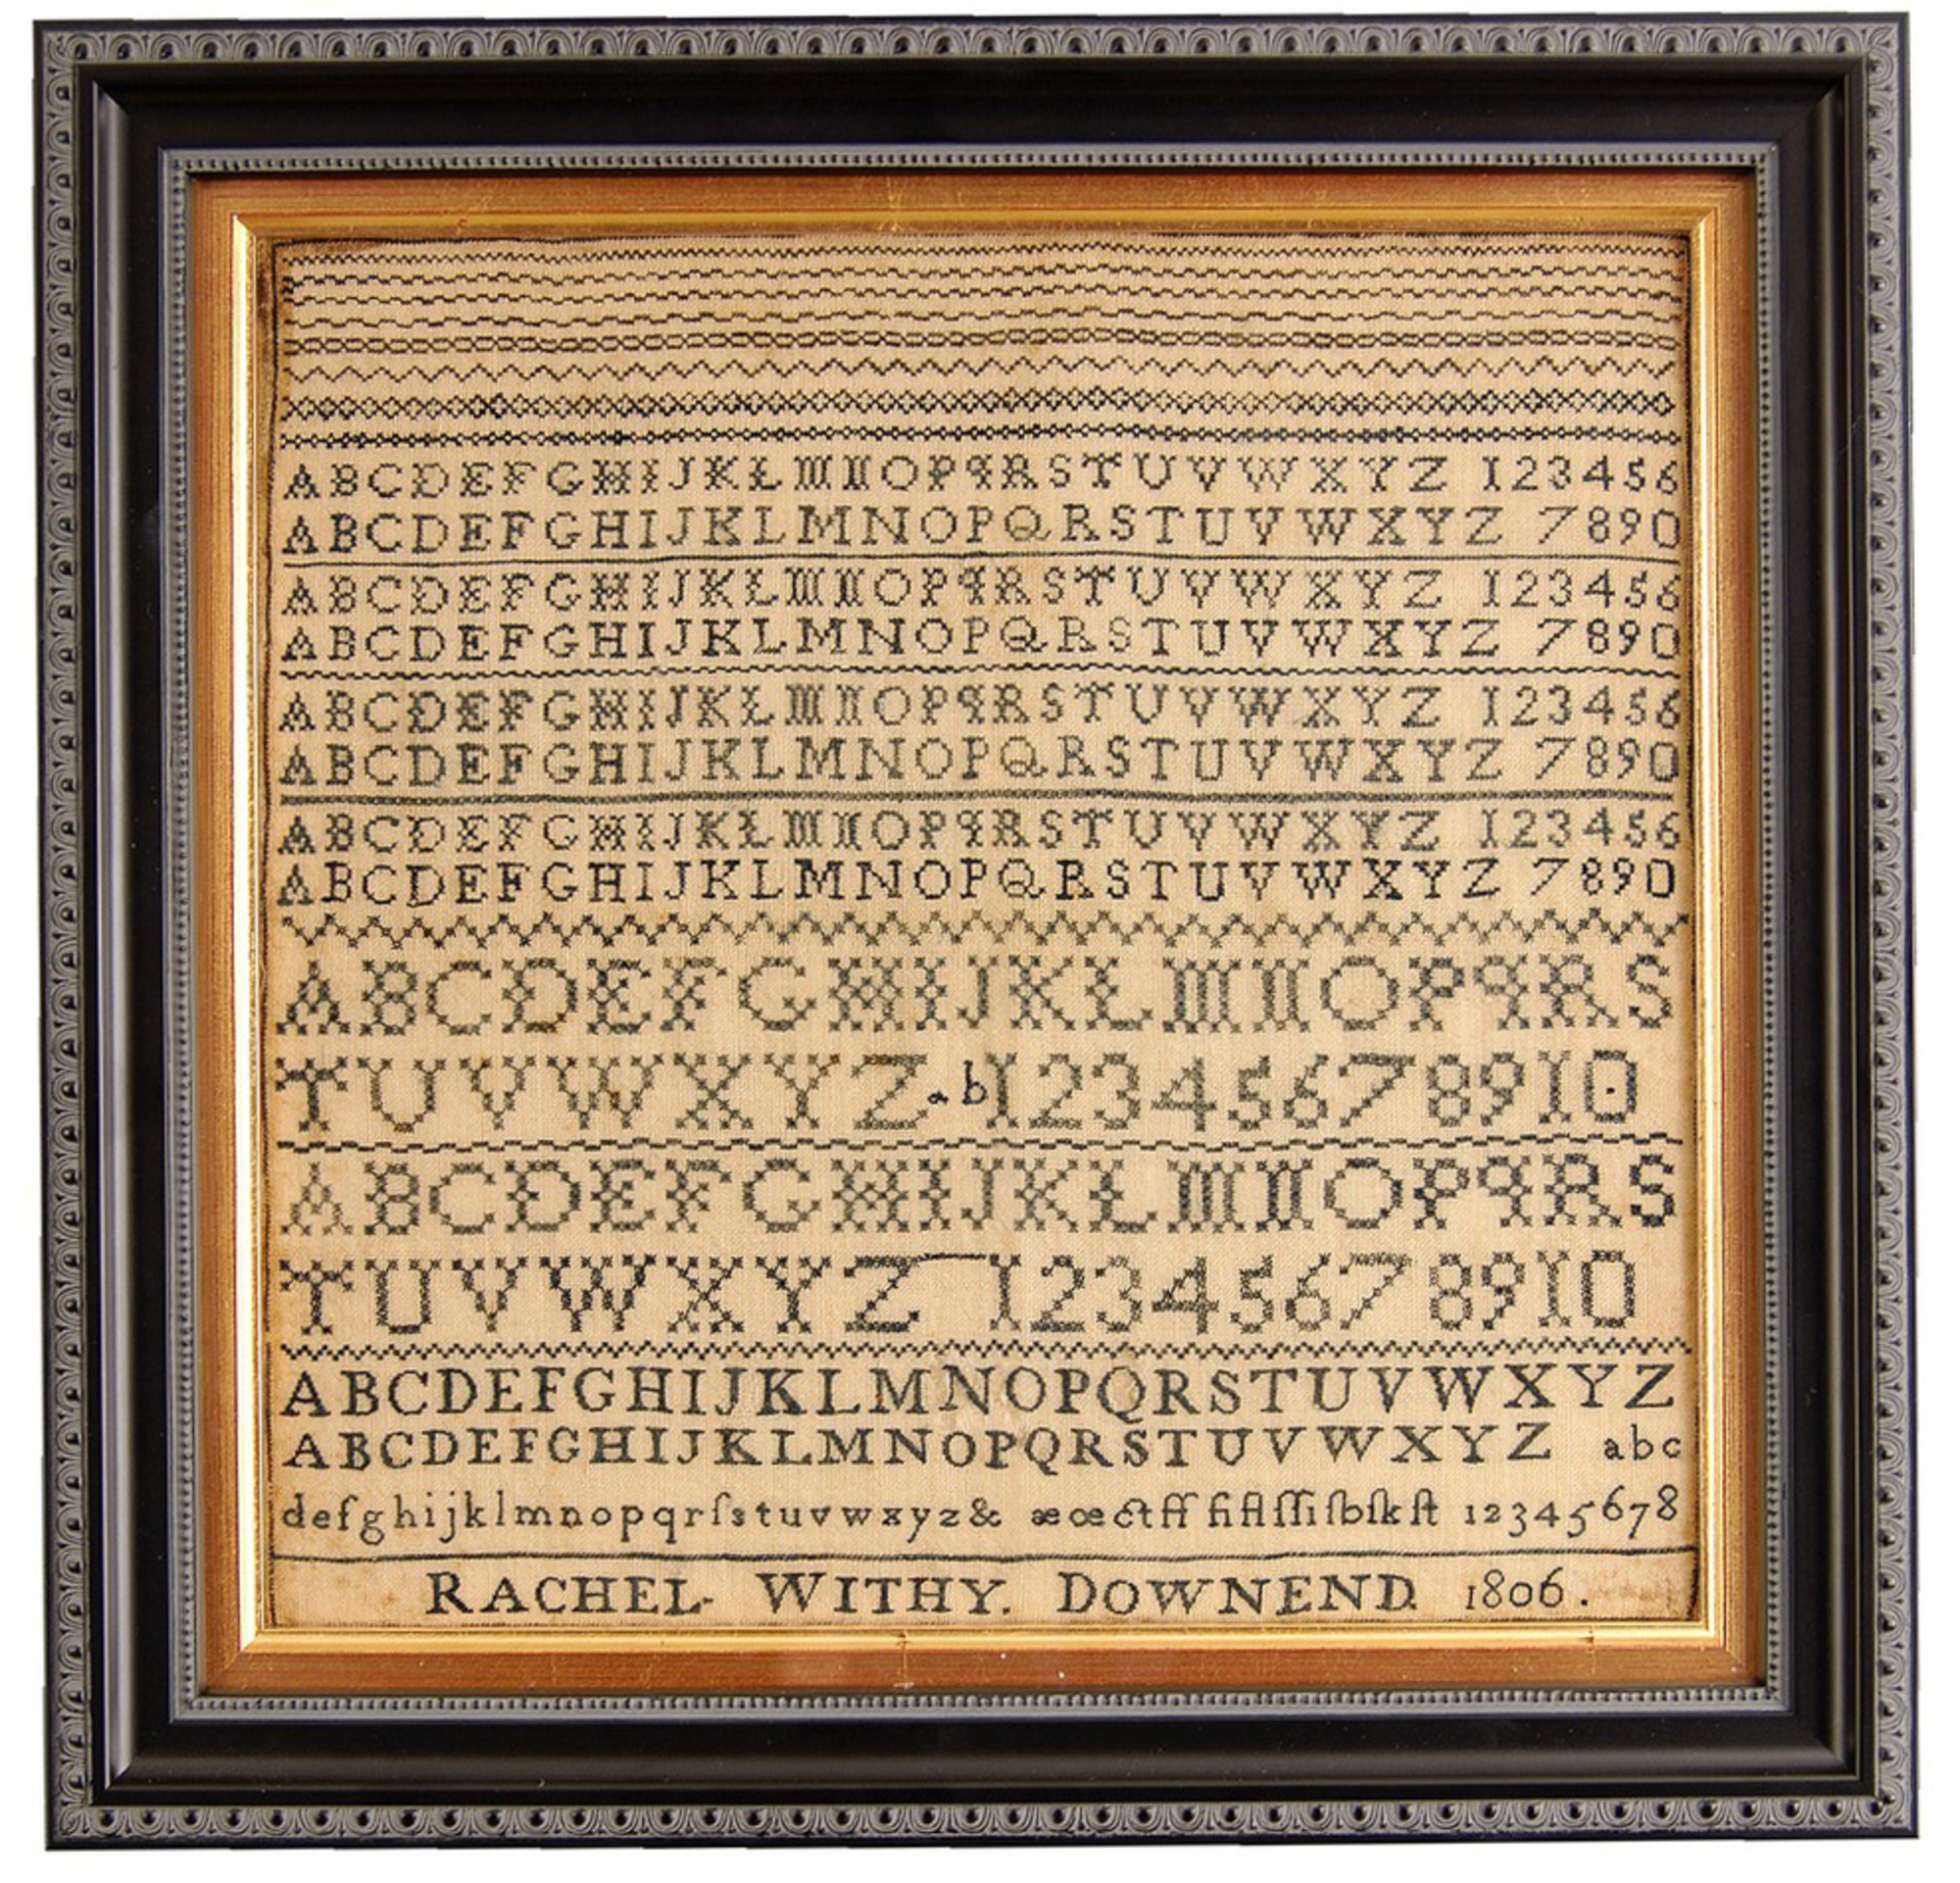 Sampler by Rachel Withy, 1806